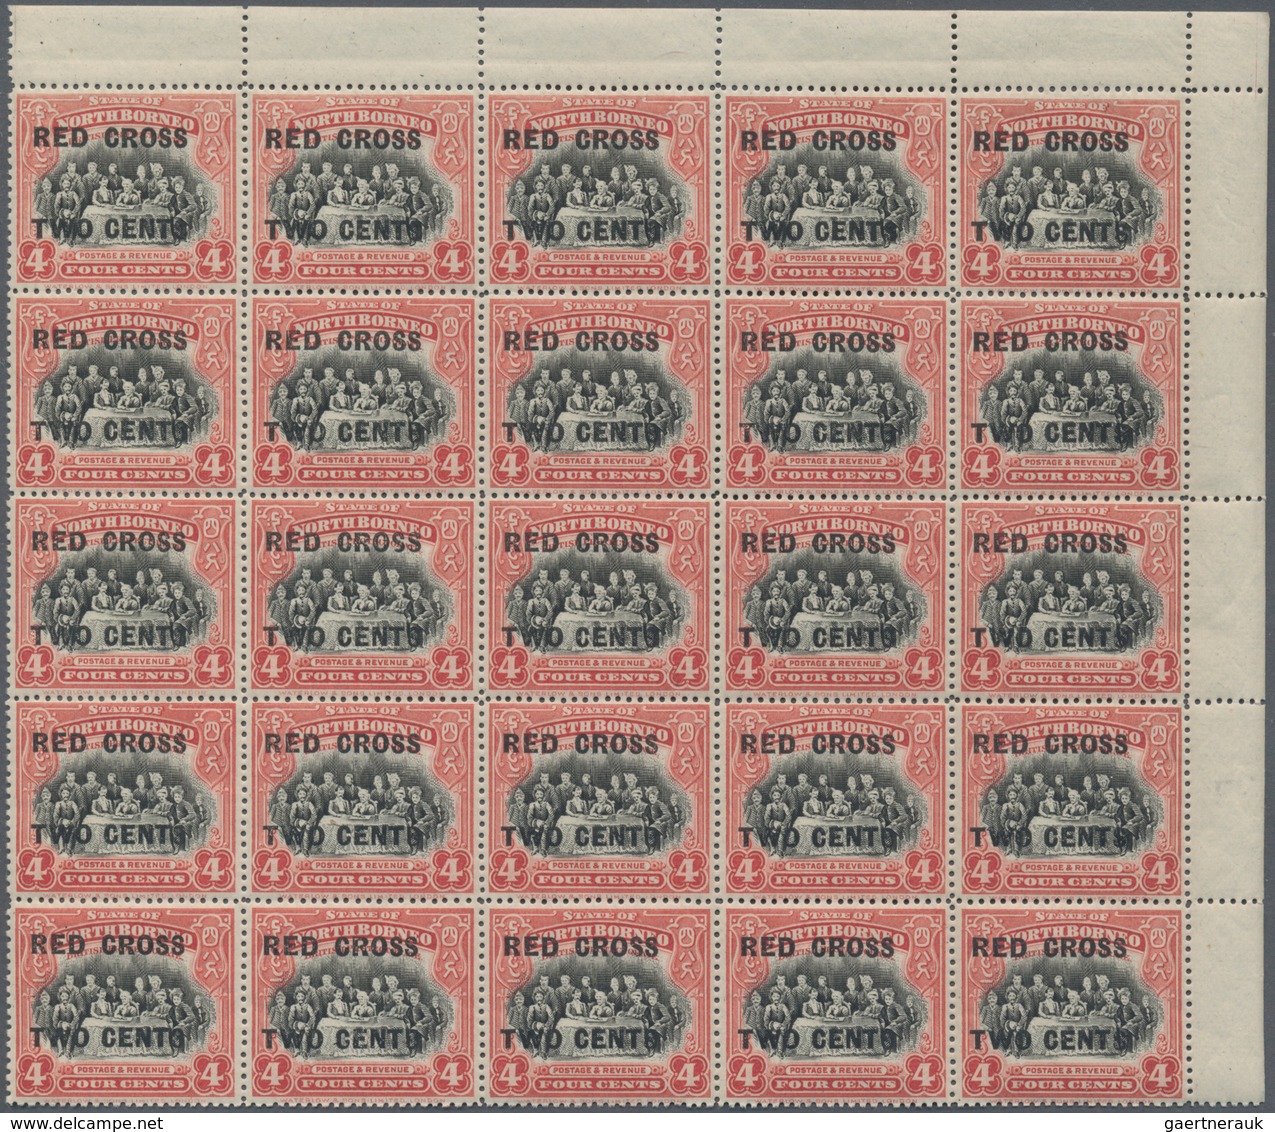 Nordborneo: 1918, Red Cross overprints 1c., 2c., 3c., 4c., 5c., 6c., 8c., seven values in blocks of